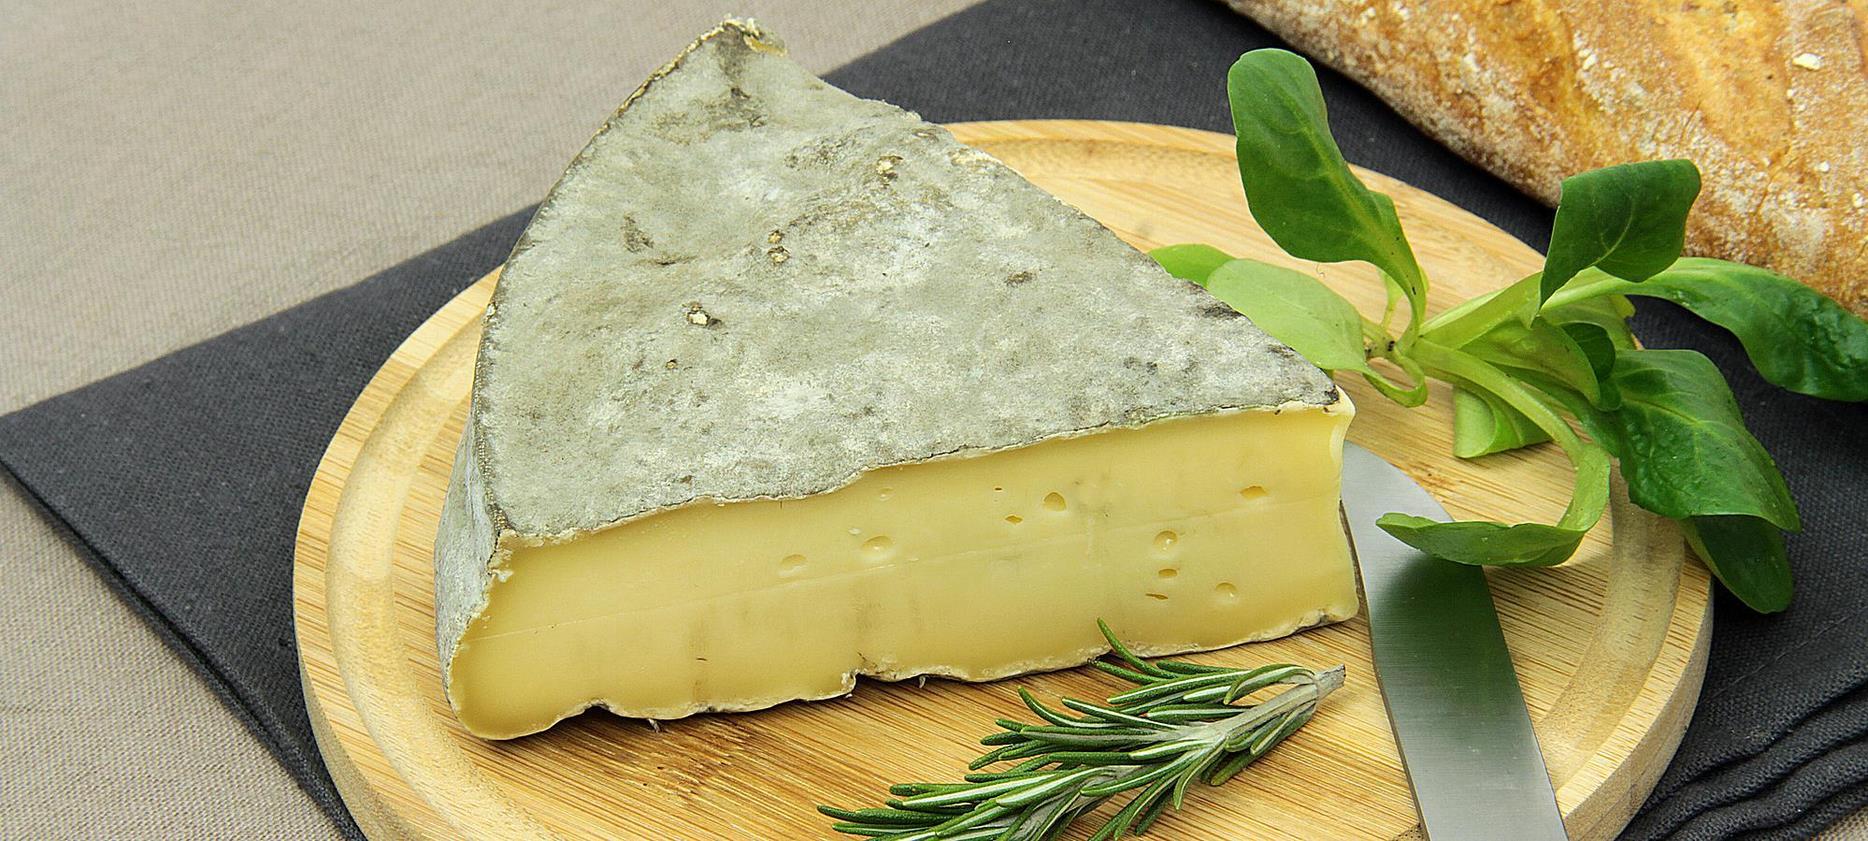 AOP Auvergne cheese - Le Saint Nectaire, Saint Nectaire Farmer made with raw milk